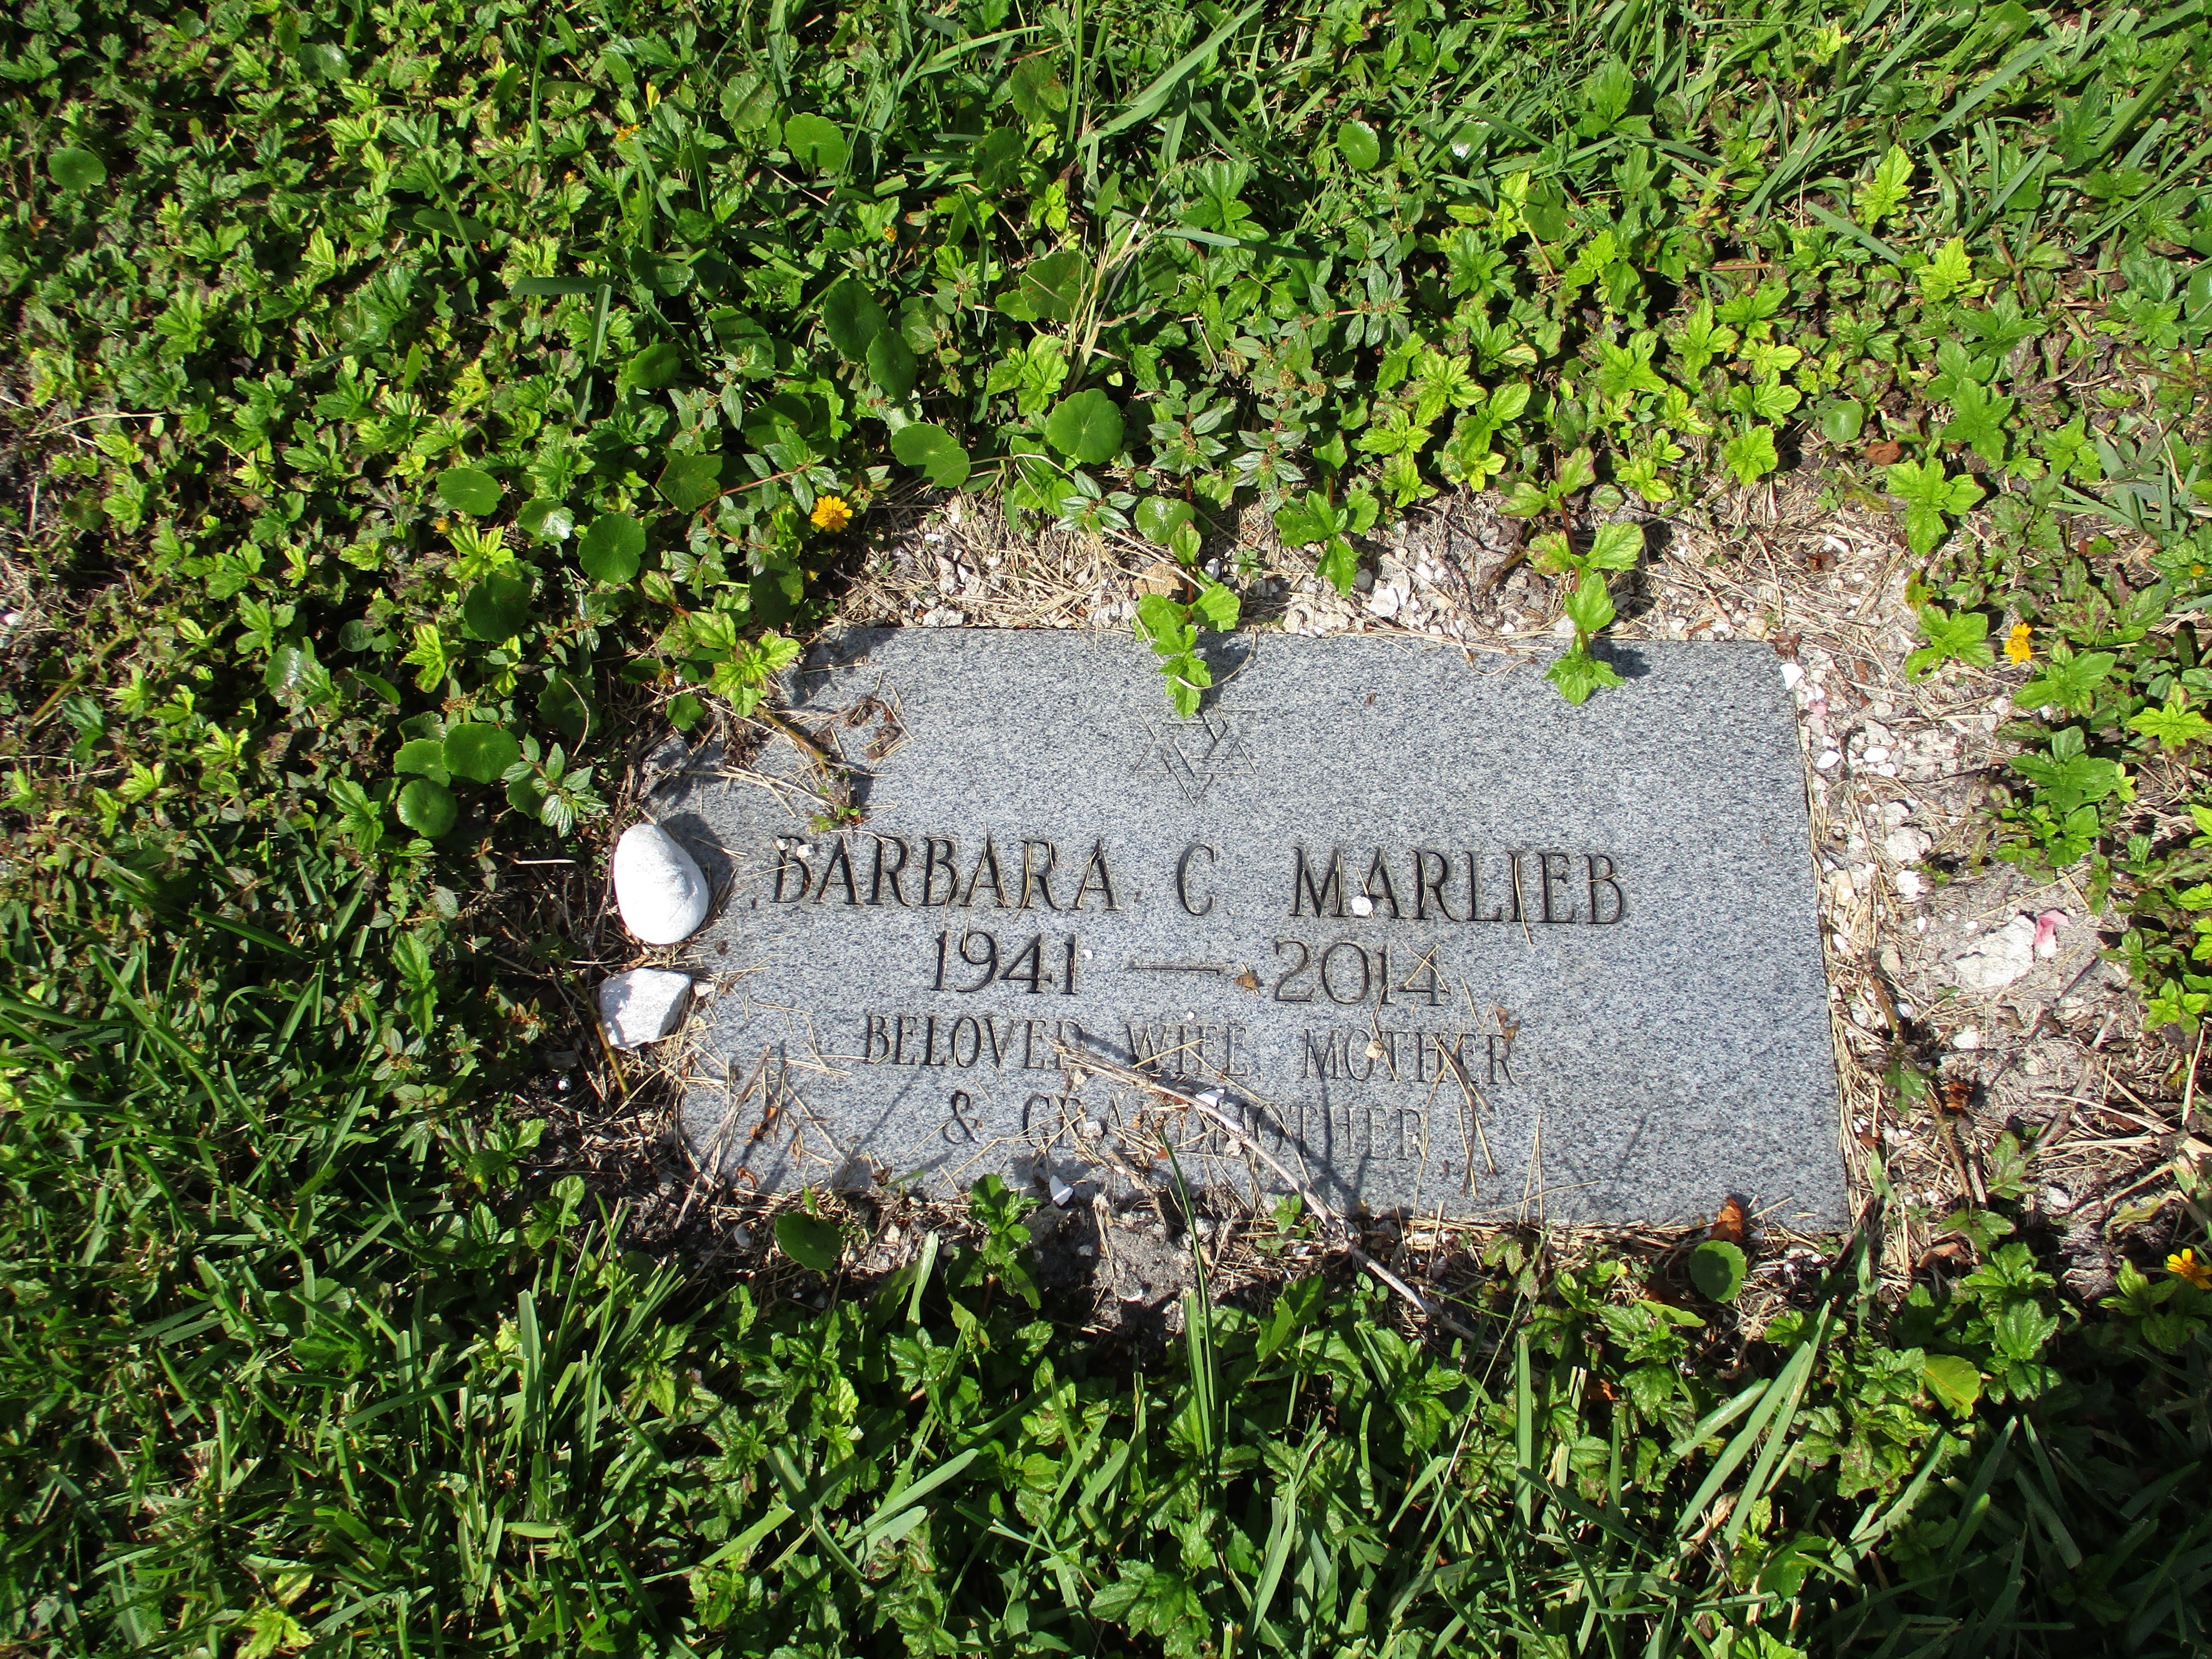 Barbara C Marlieb